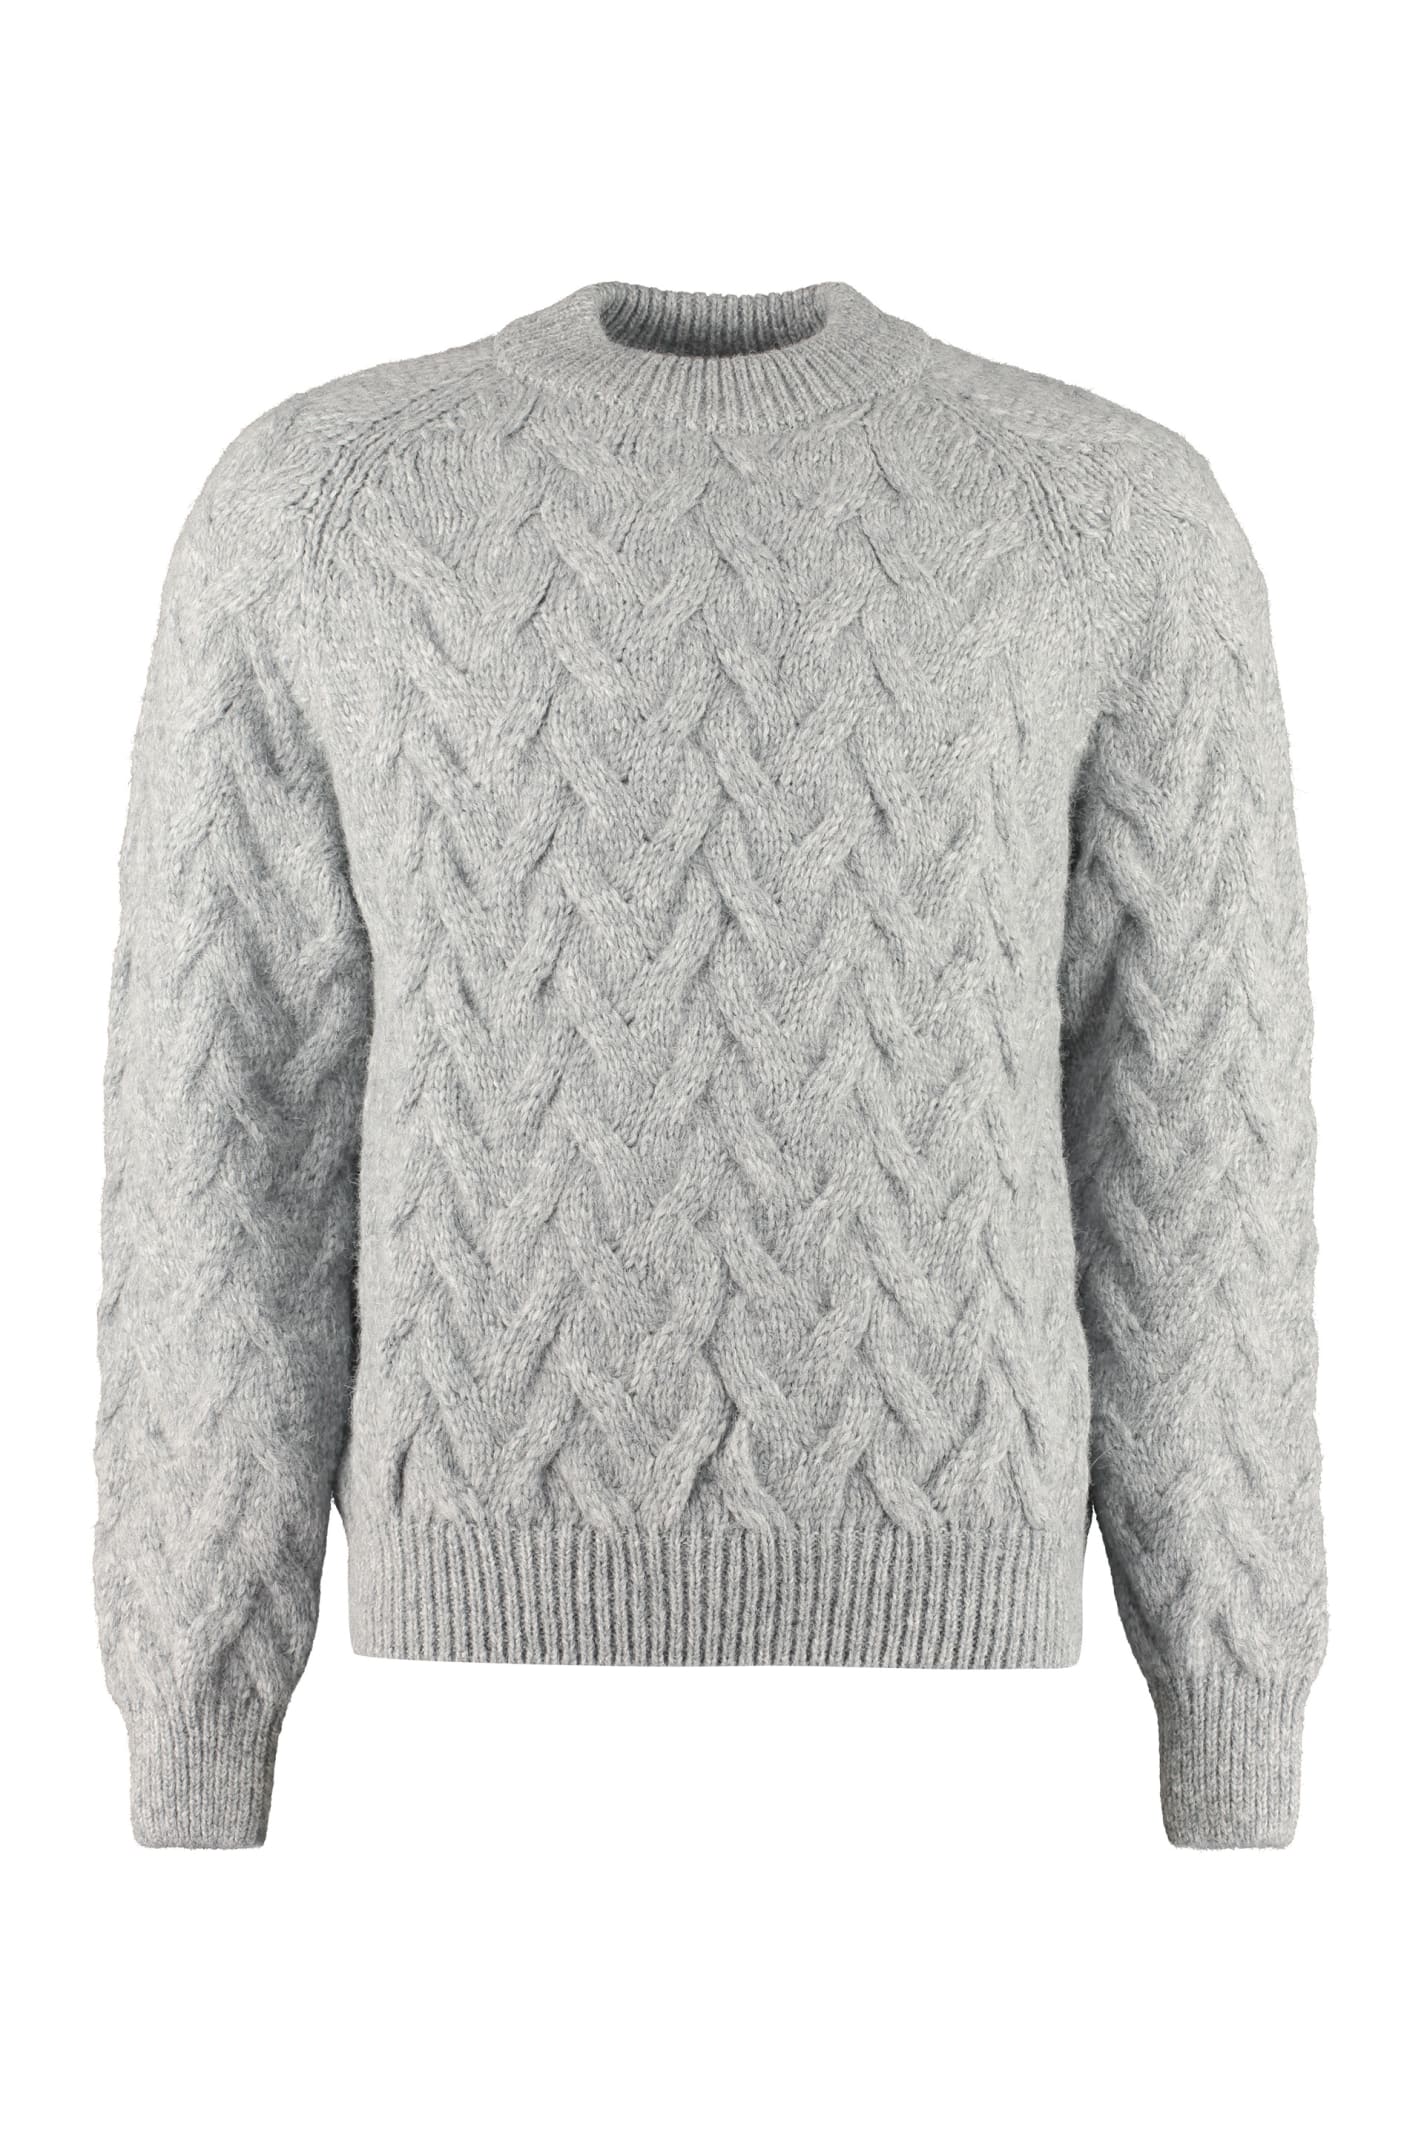 Séfr Abi Cable Knit Sweater